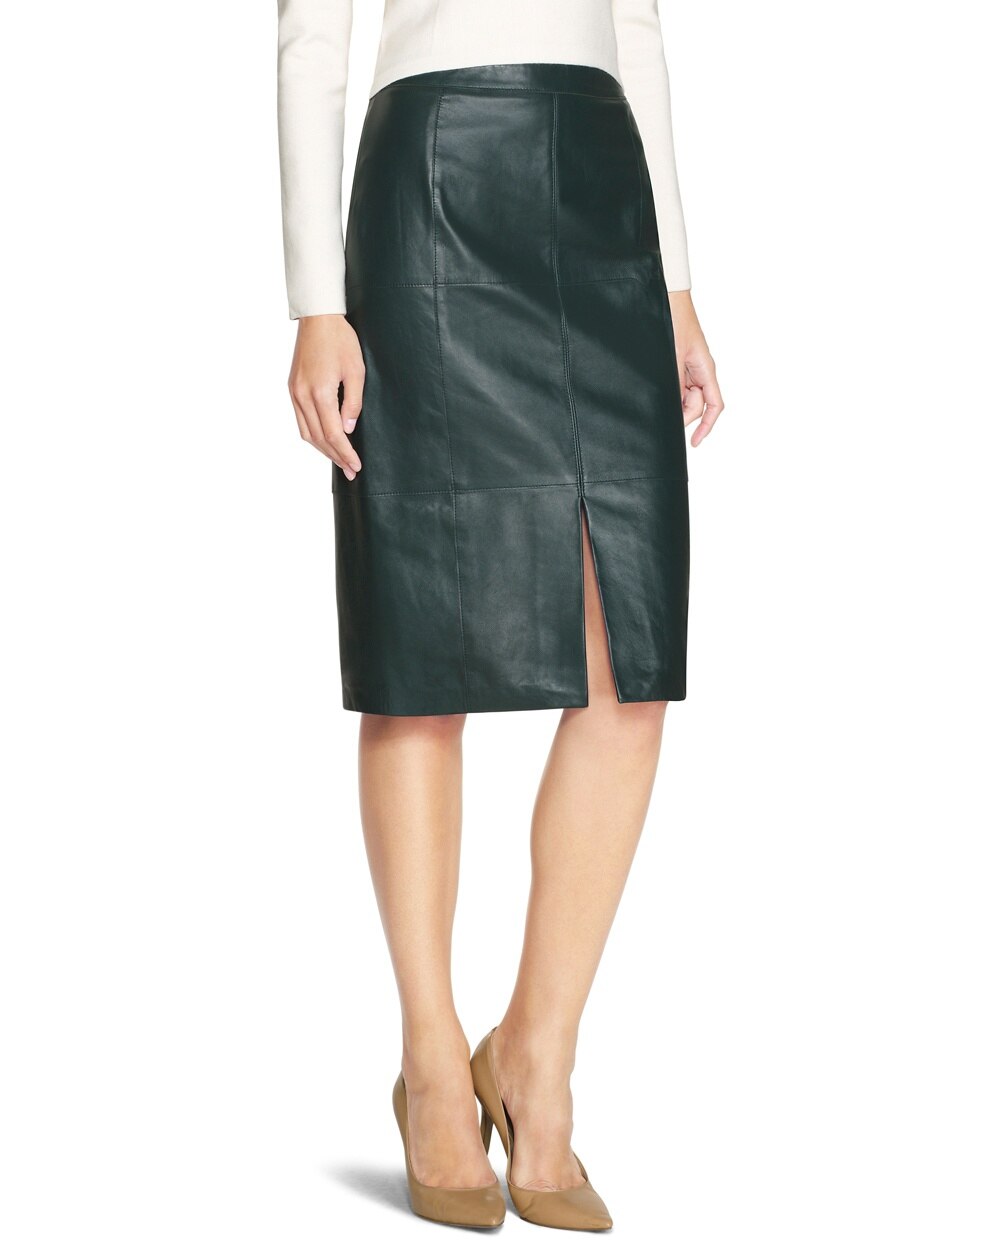 Leather Pencil Skirt - White House Black Market